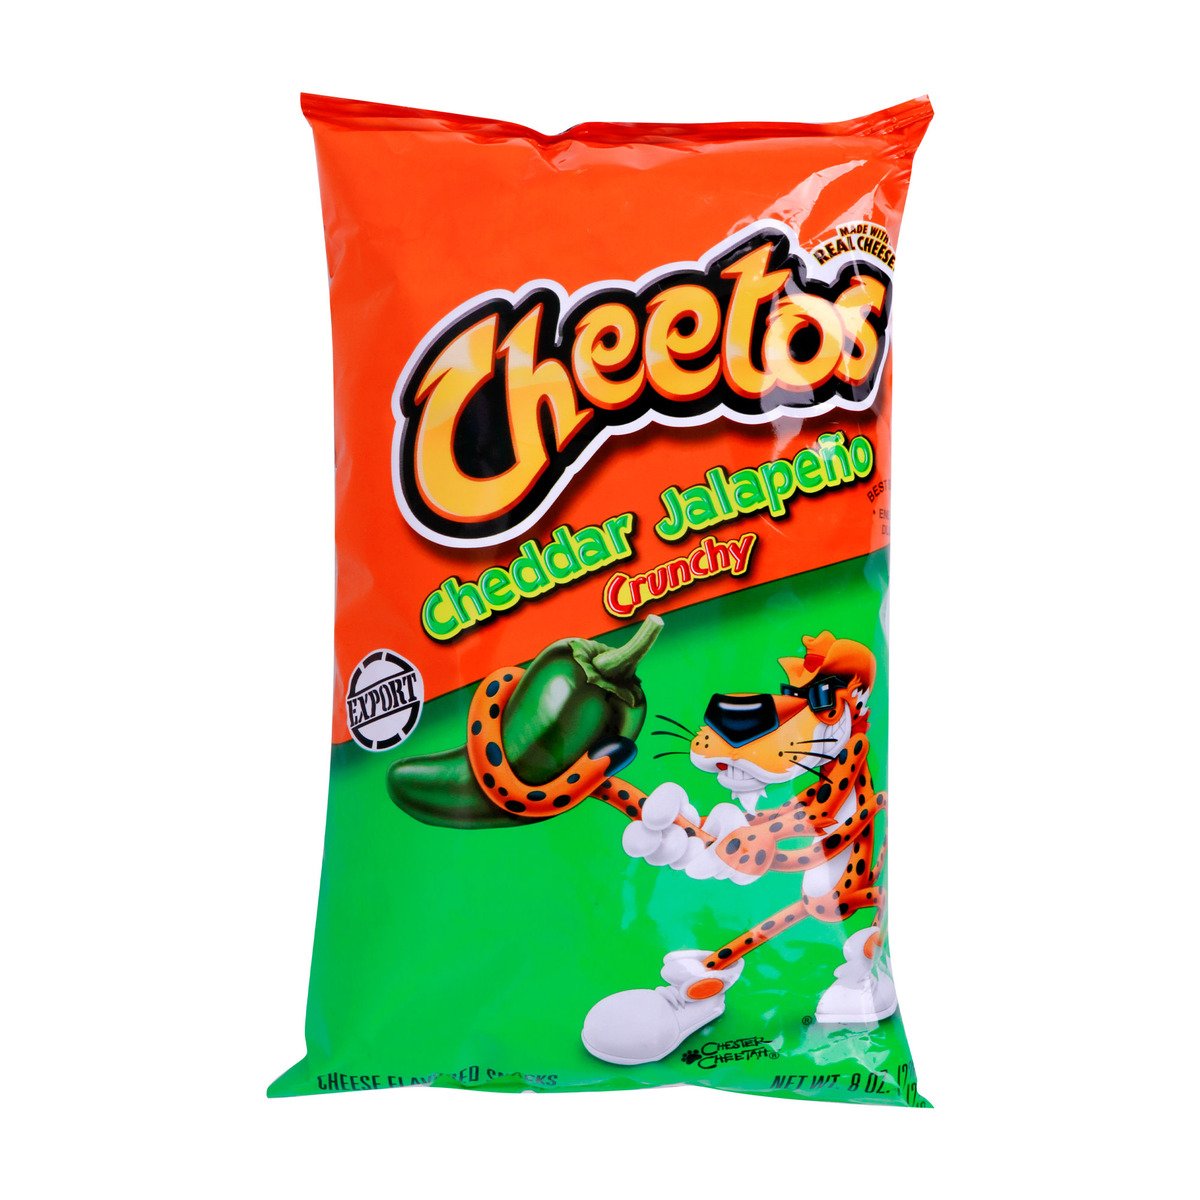 Cheetos Cheddar Jalapeno Crunchy 8 oz